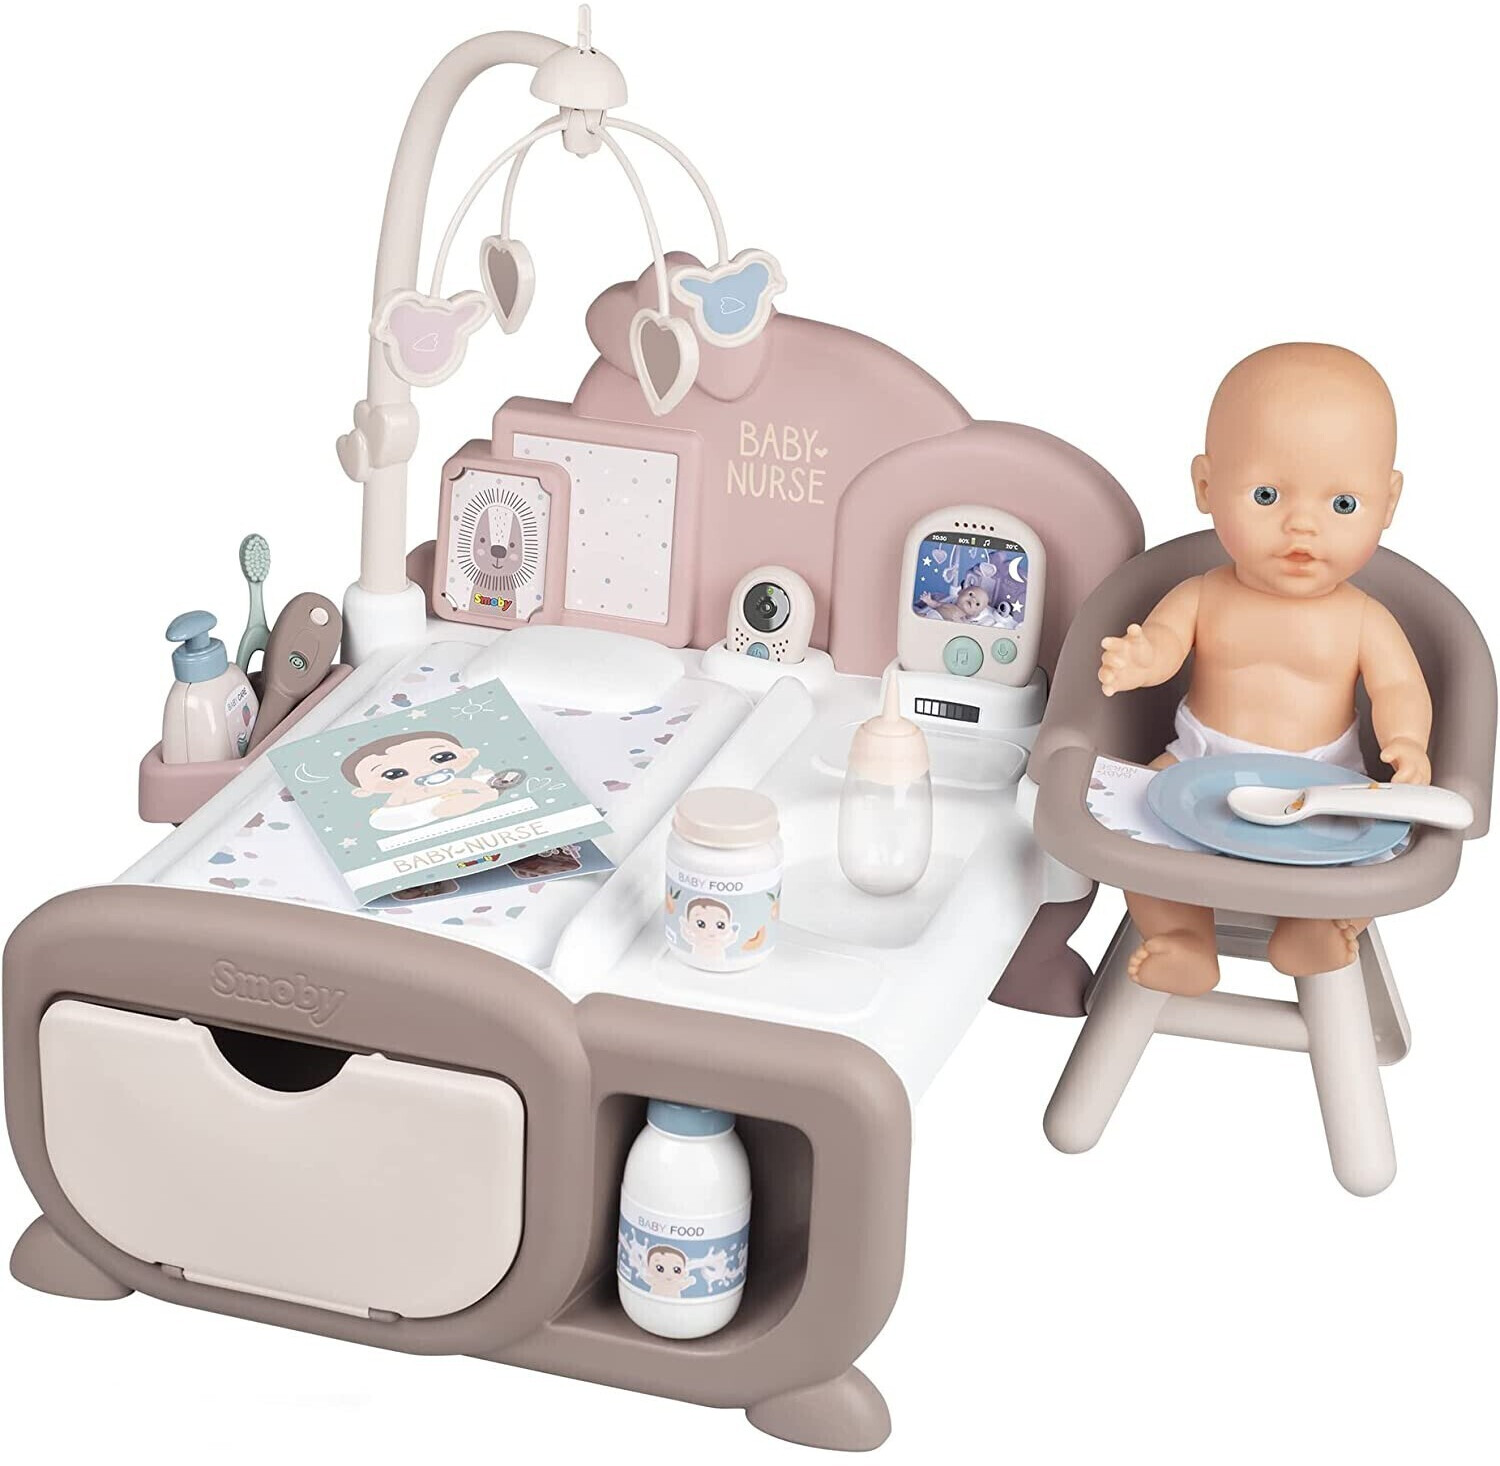 Photos - Doll Smoby Baby Nurse - Cocoon nursery 